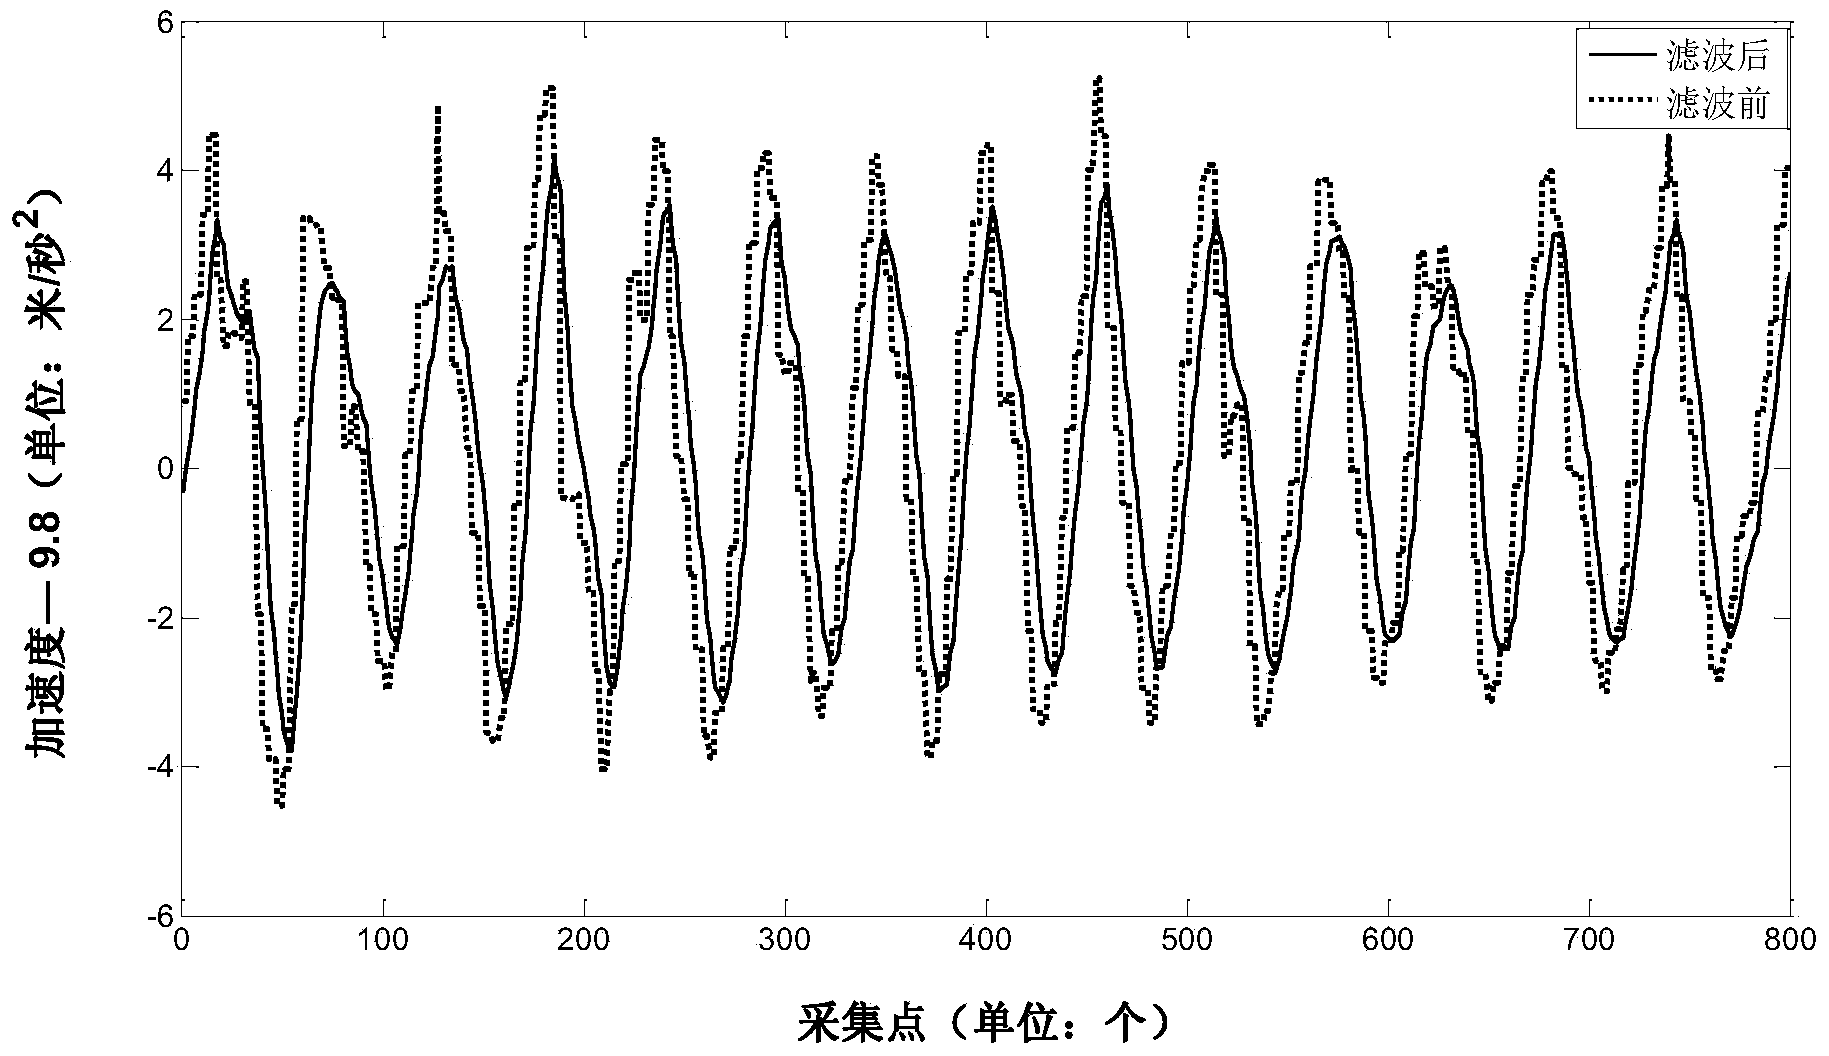 Step-counting method based on acceleration sensor